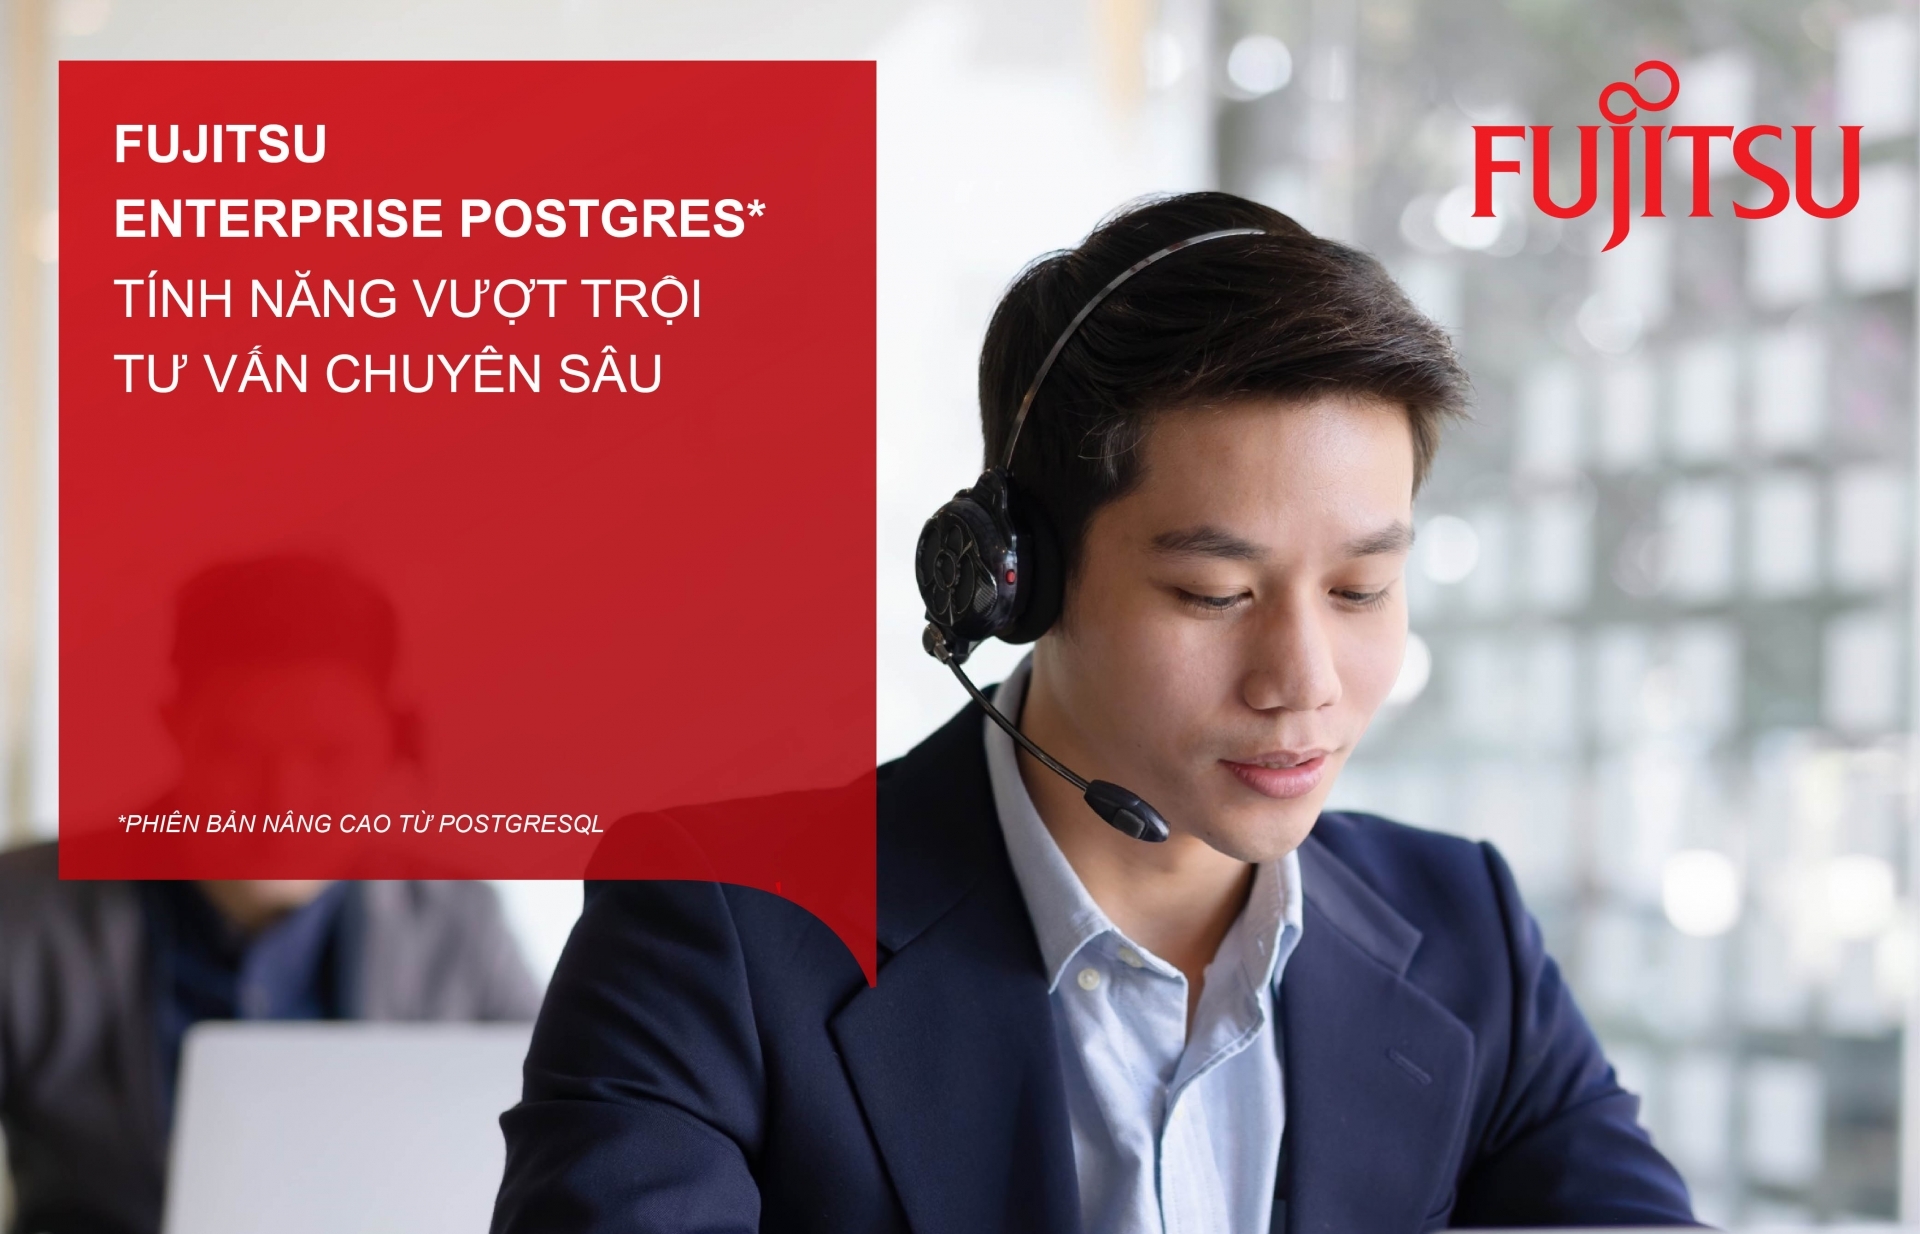 FUJITSU Enterprise Postgres optimises data system